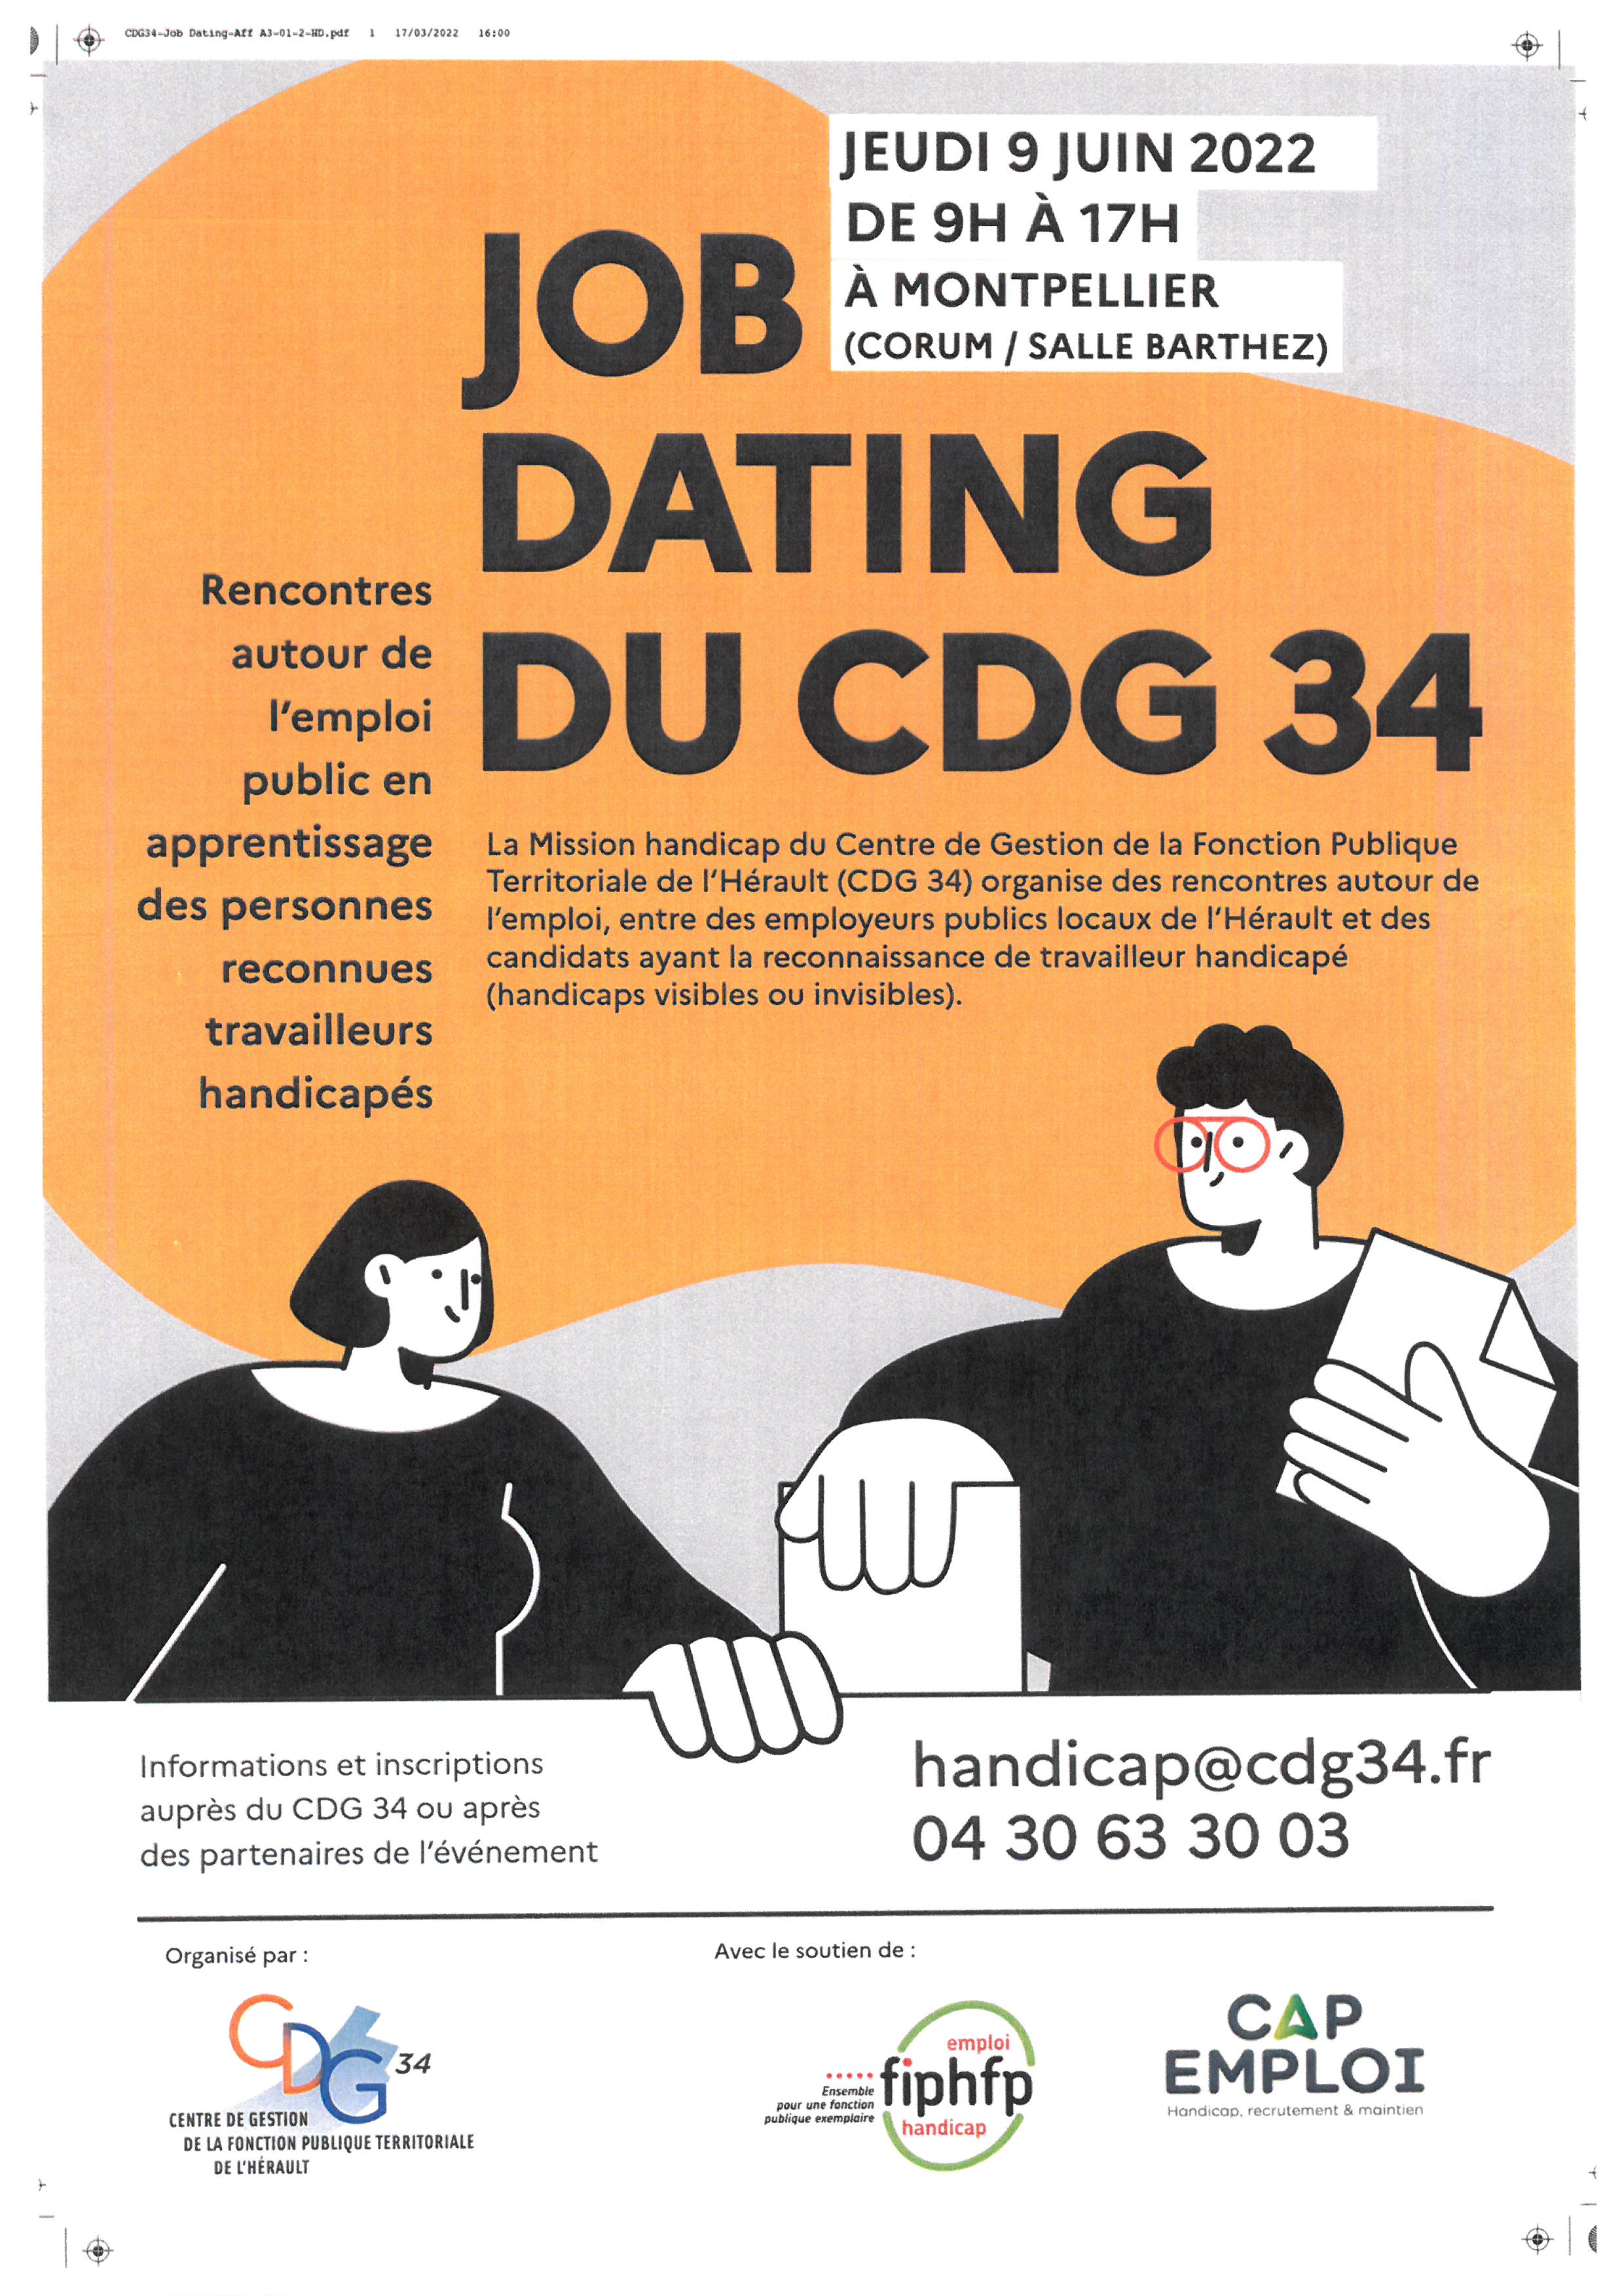 JOB DATING DU CDG 34